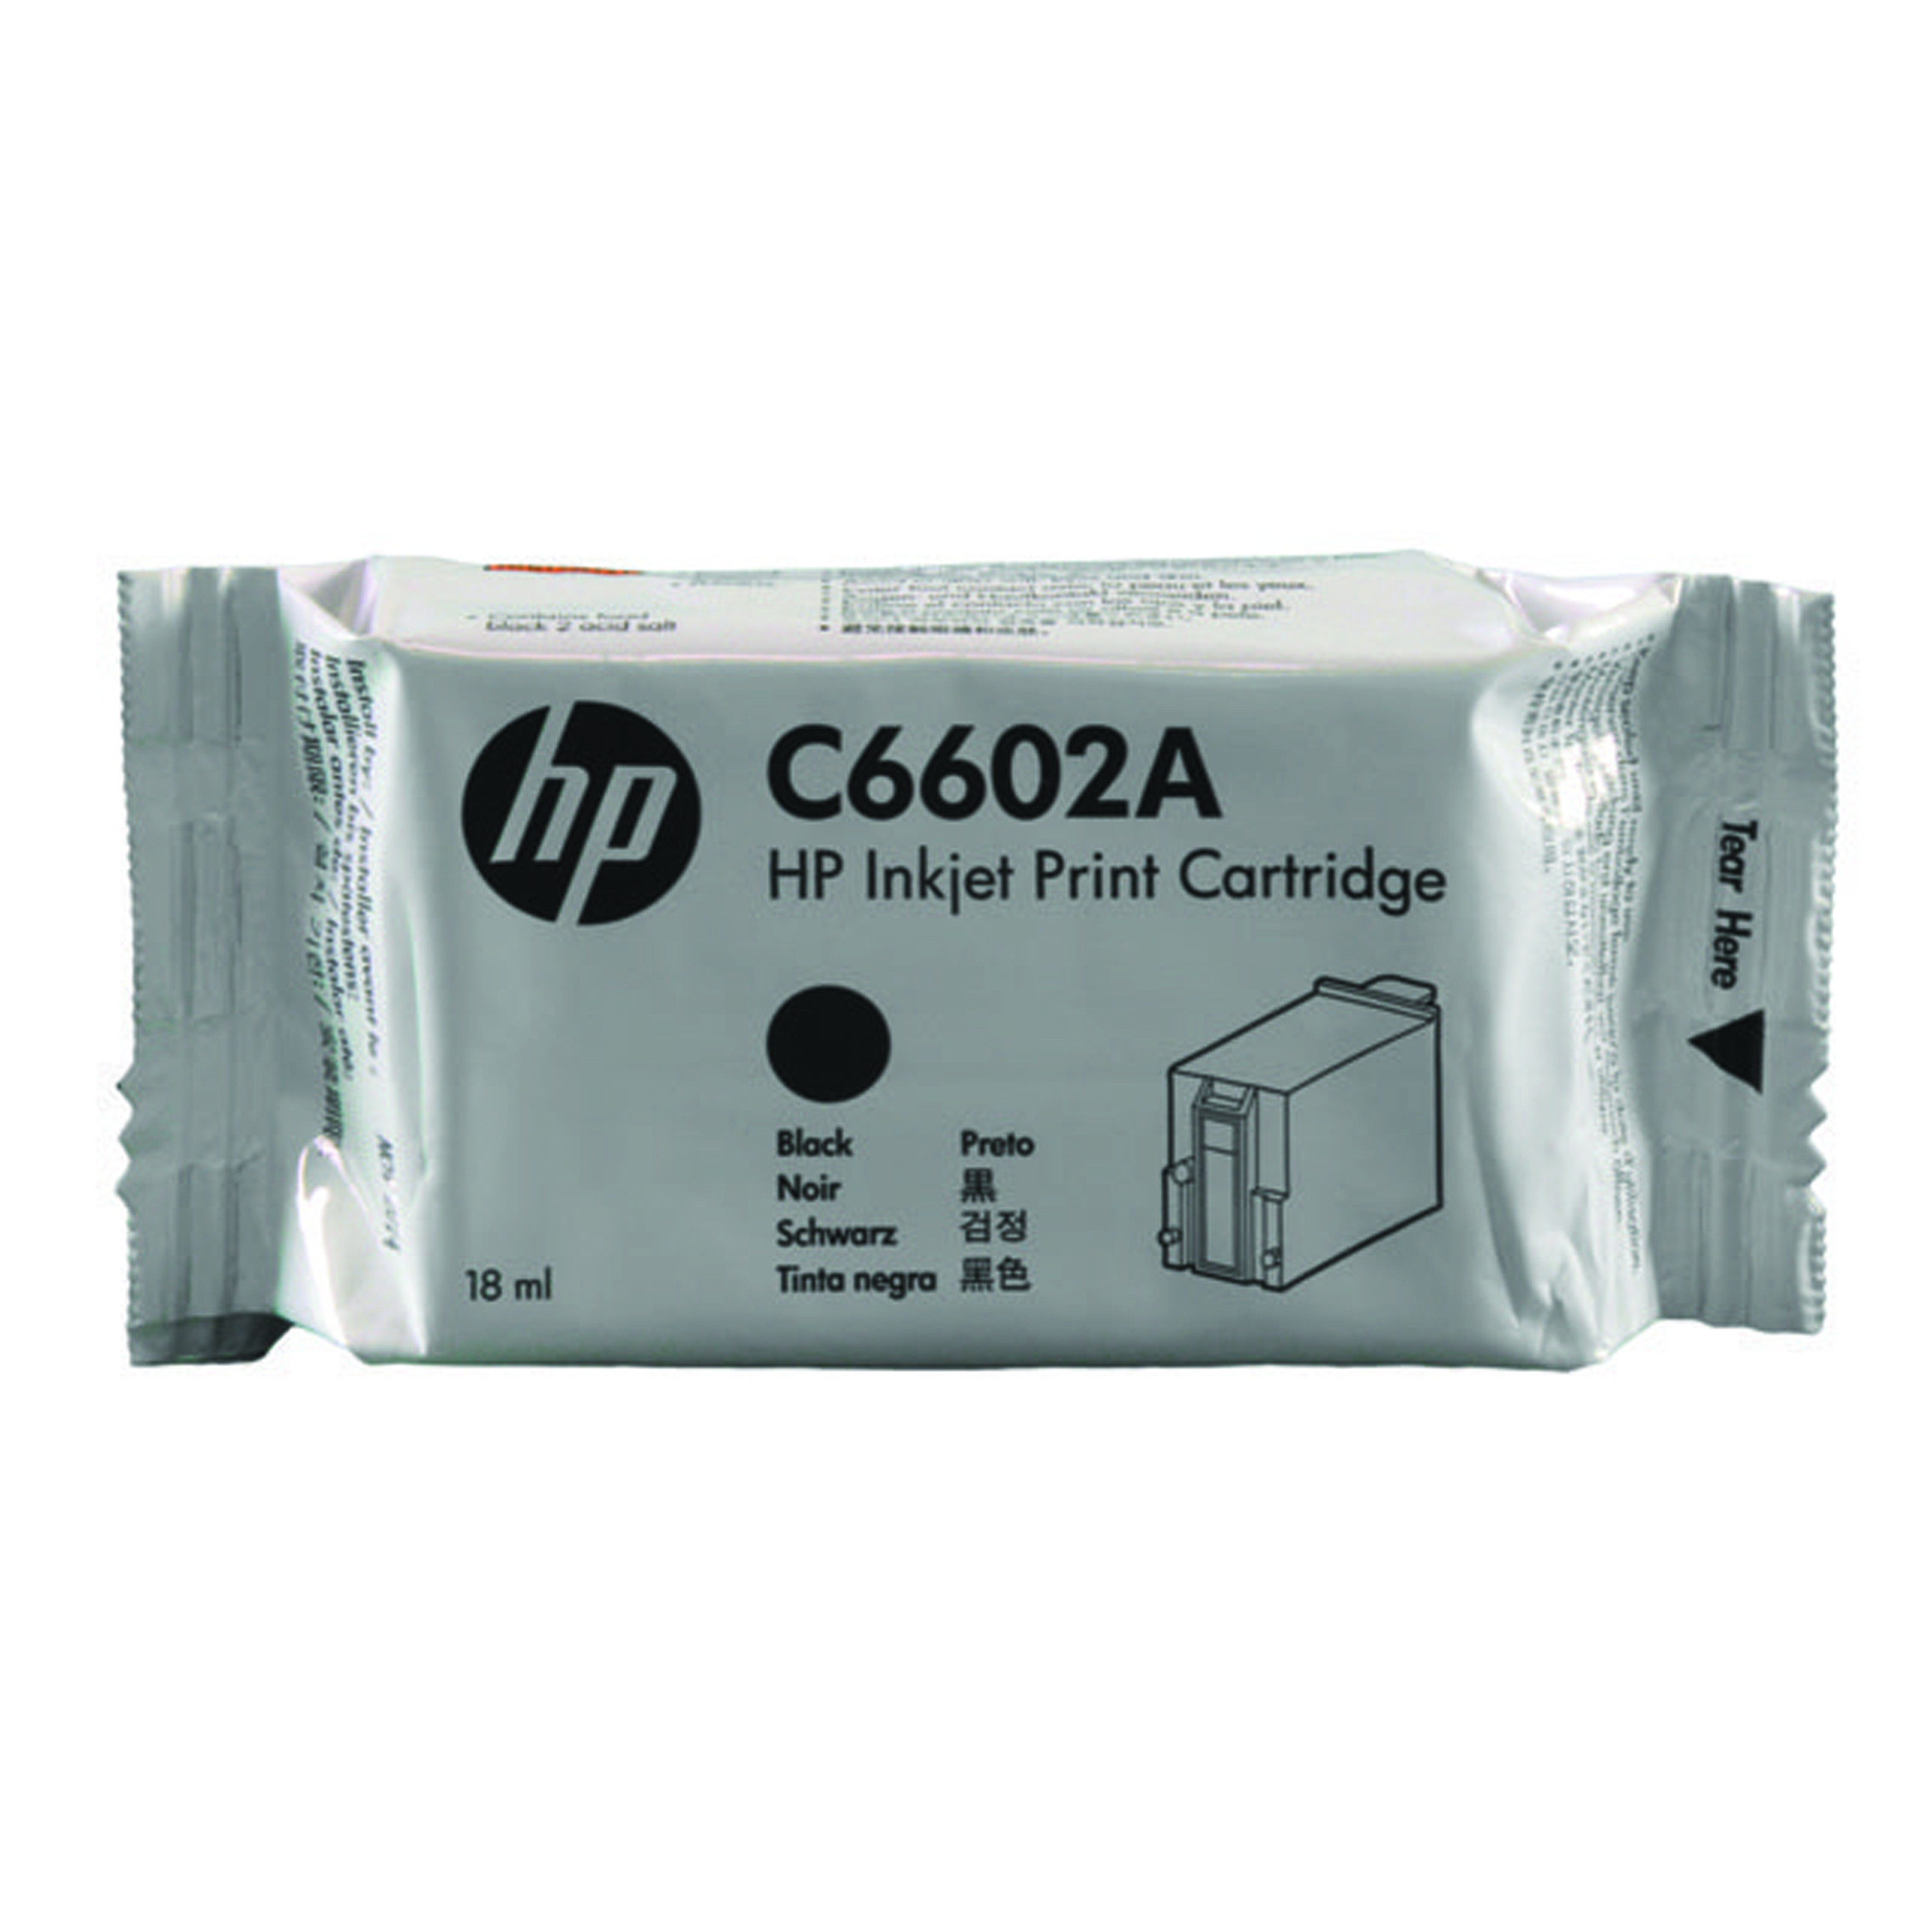 HP 1.0 Black EPOS Inkjet Print Cartridge C6602A